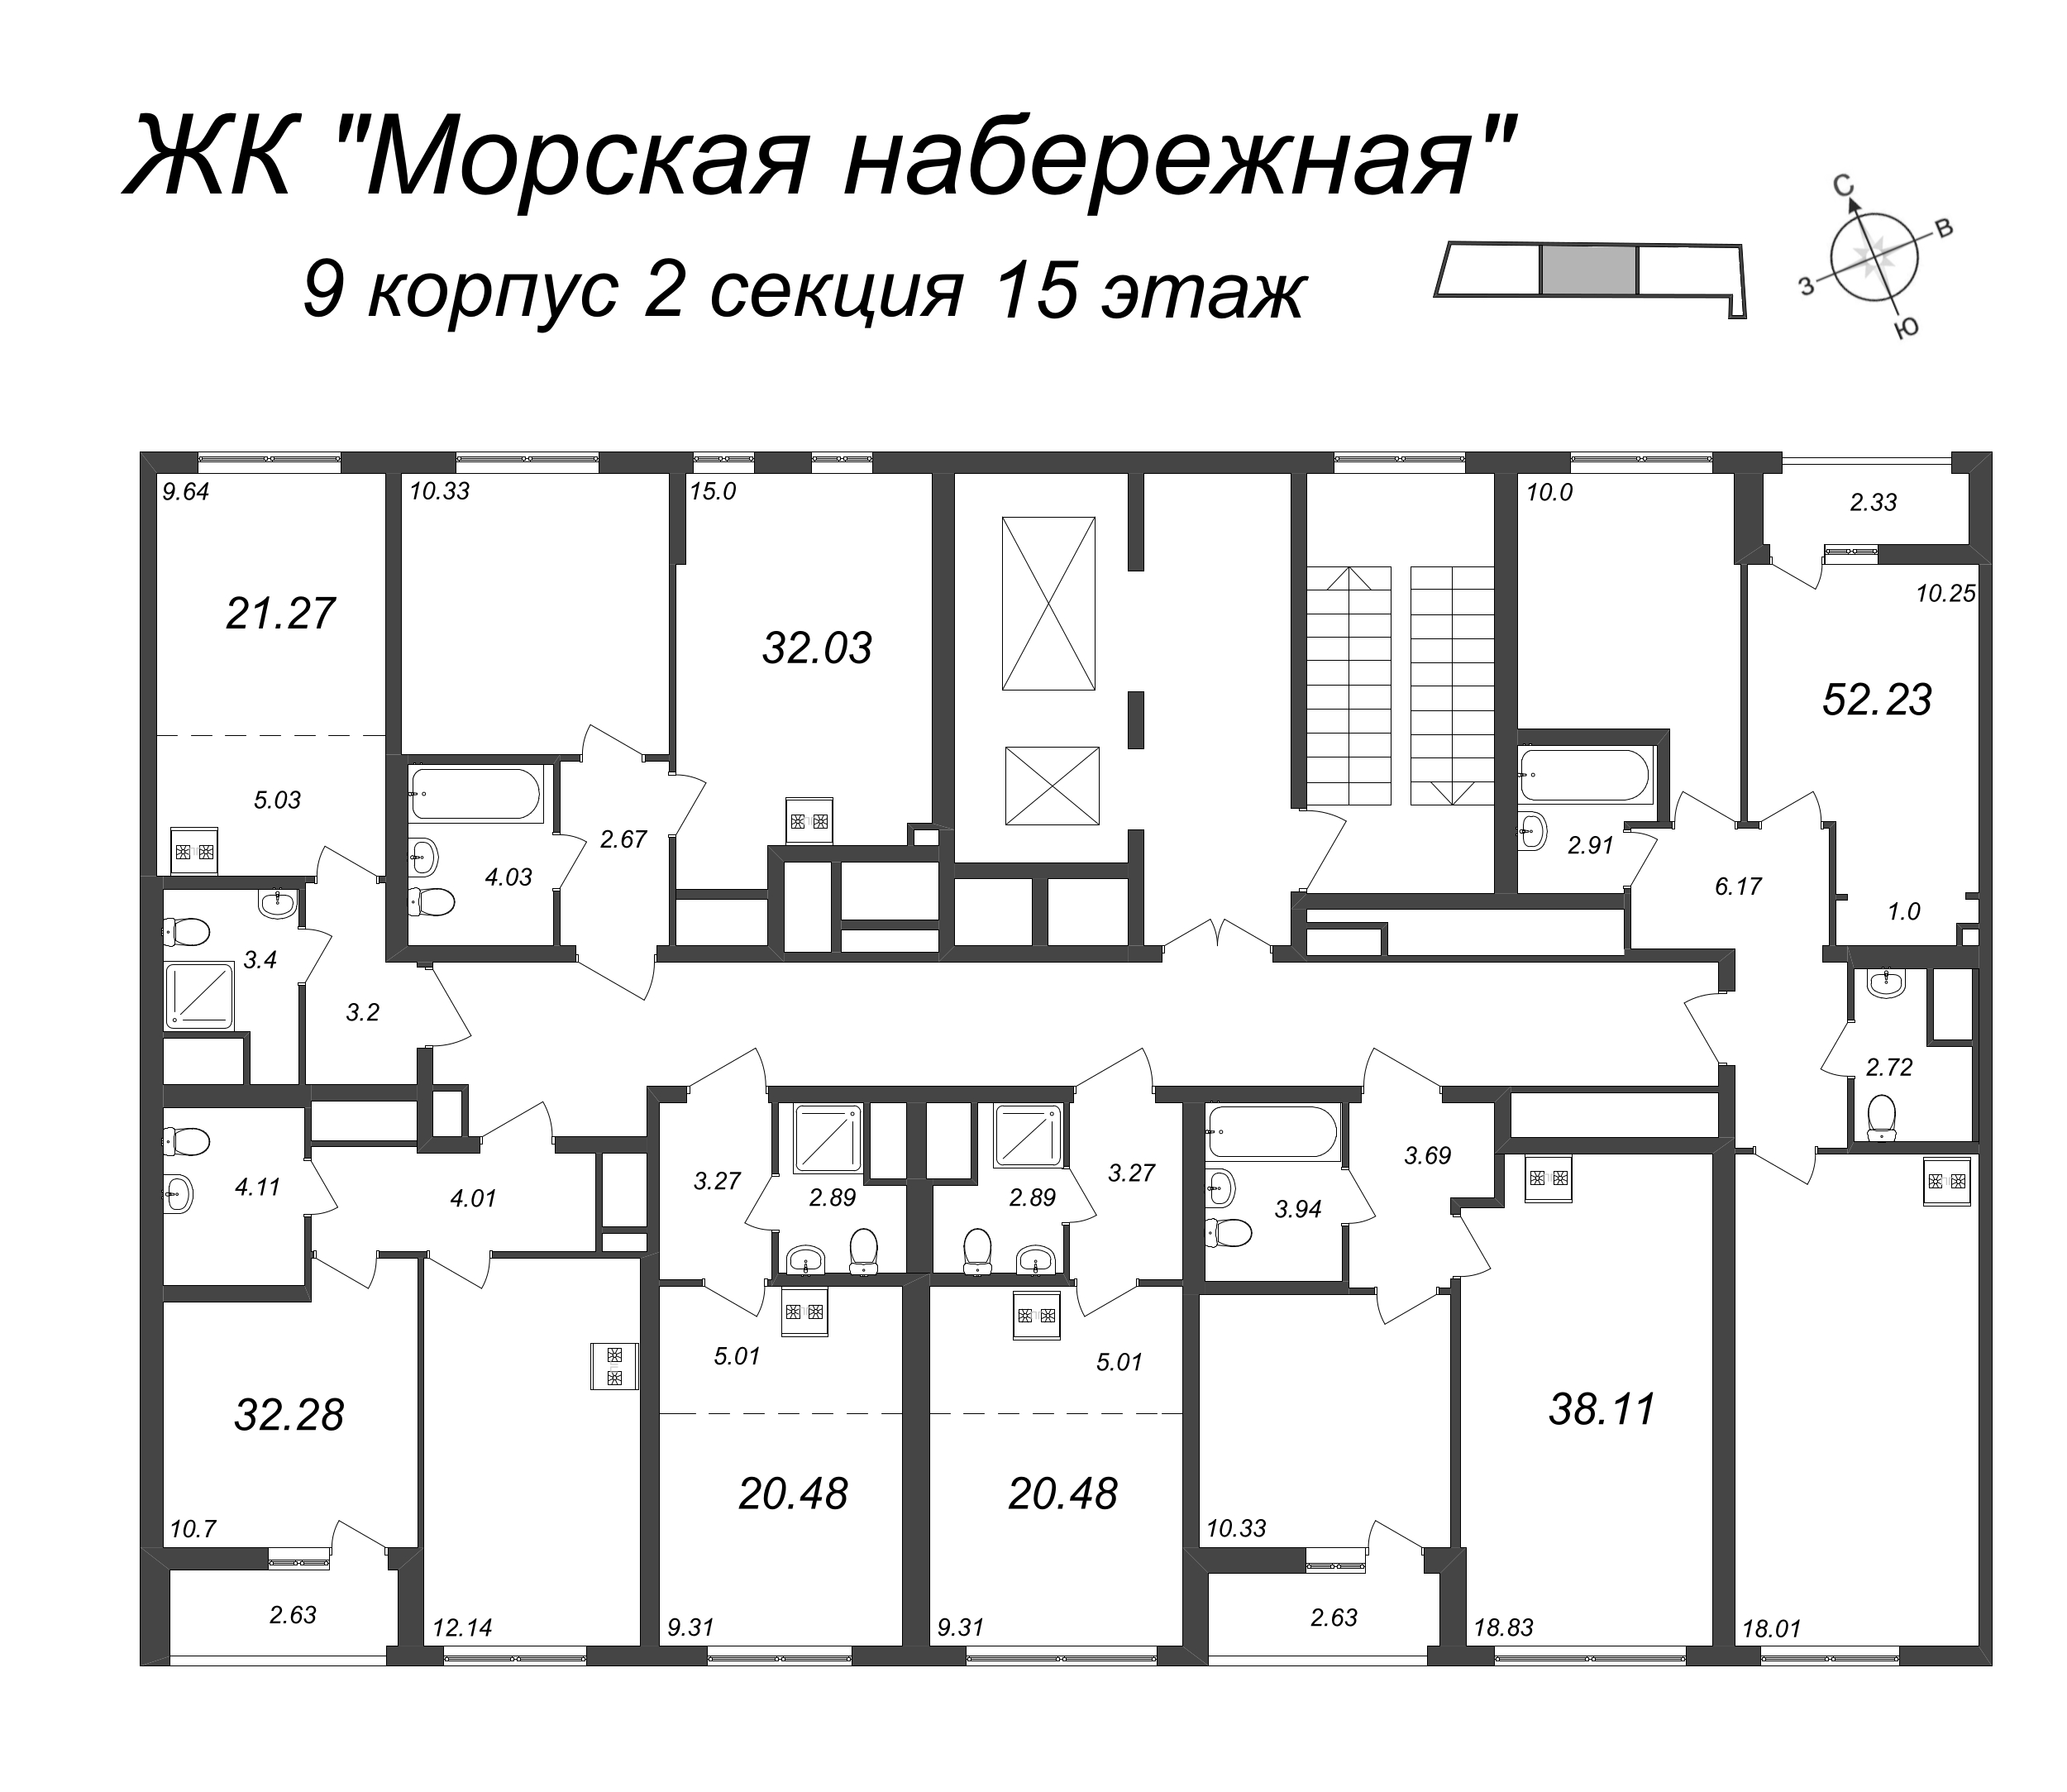 2-комнатная (Евро) квартира, 38.11 м² - планировка этажа